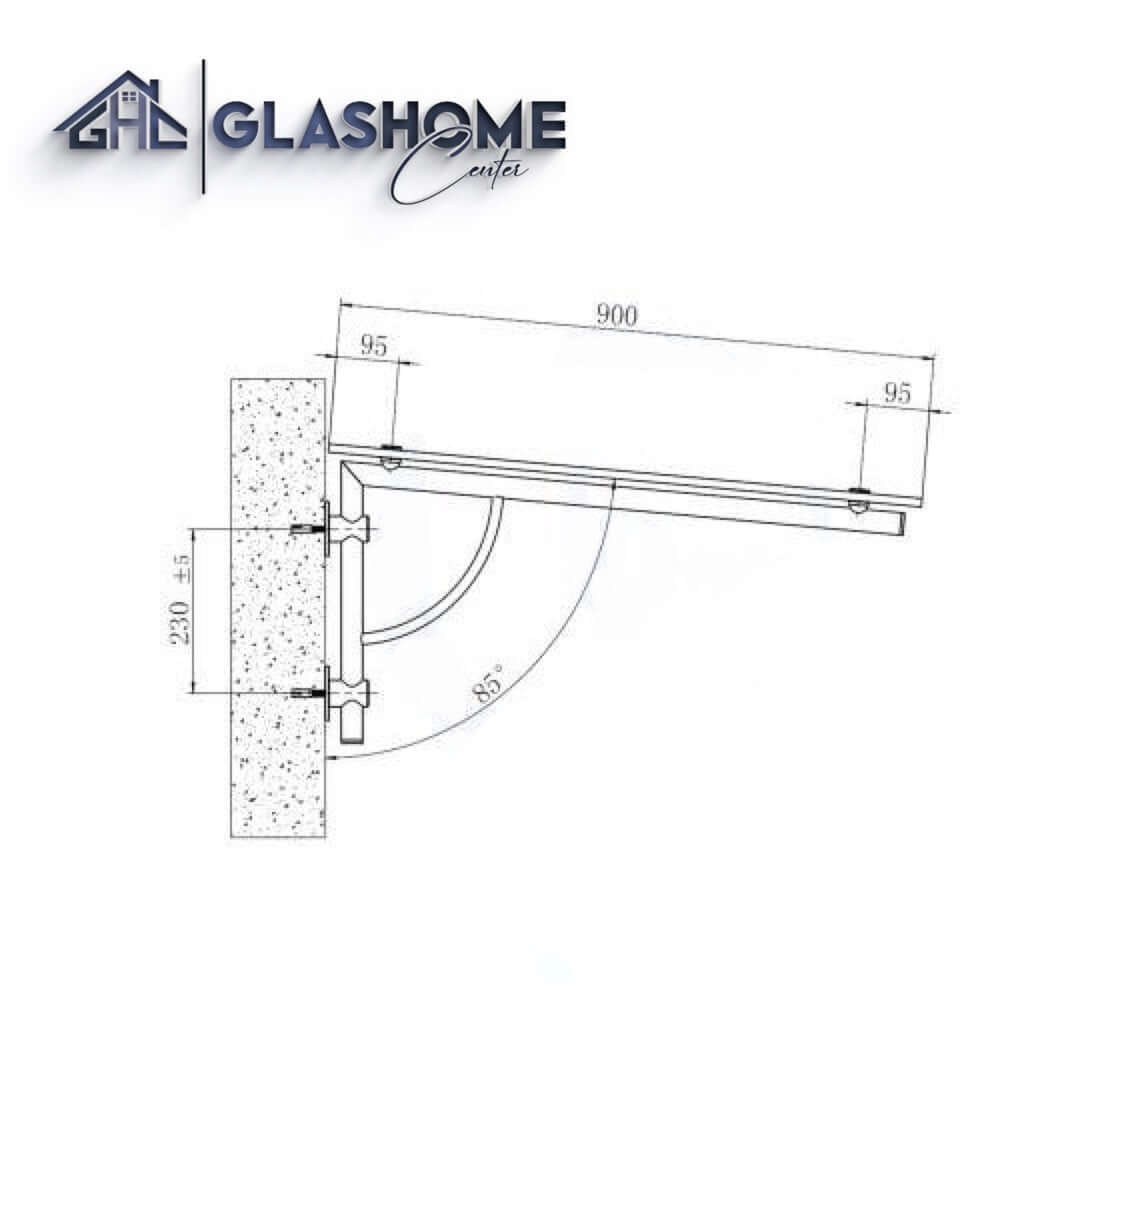 GlasHomeCenter - glass canopy - Clear glass - 180x90cm - 13.1mm VSG - incl. 2 Edelstahlhalterungen Variant "Athens"